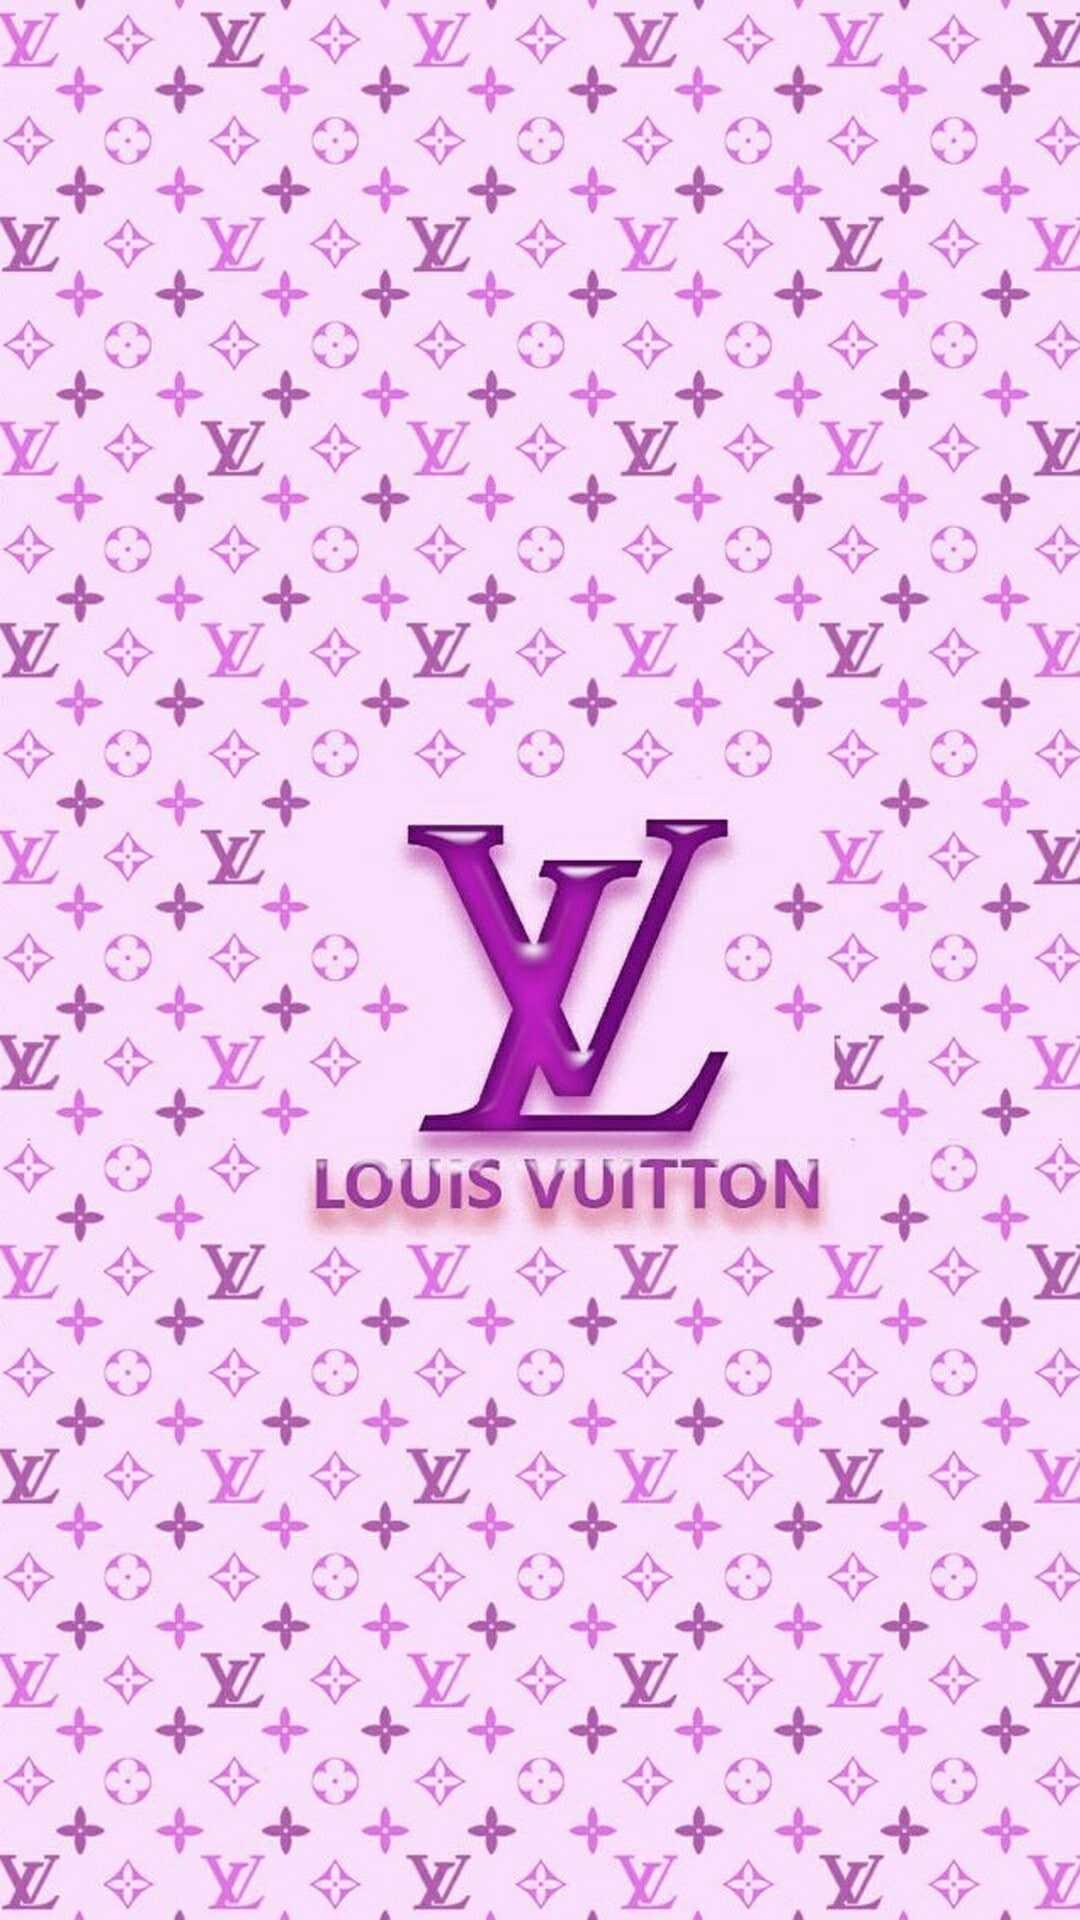 Louis Vuitton Free Desktop Wallpaper - Wallpaperforu